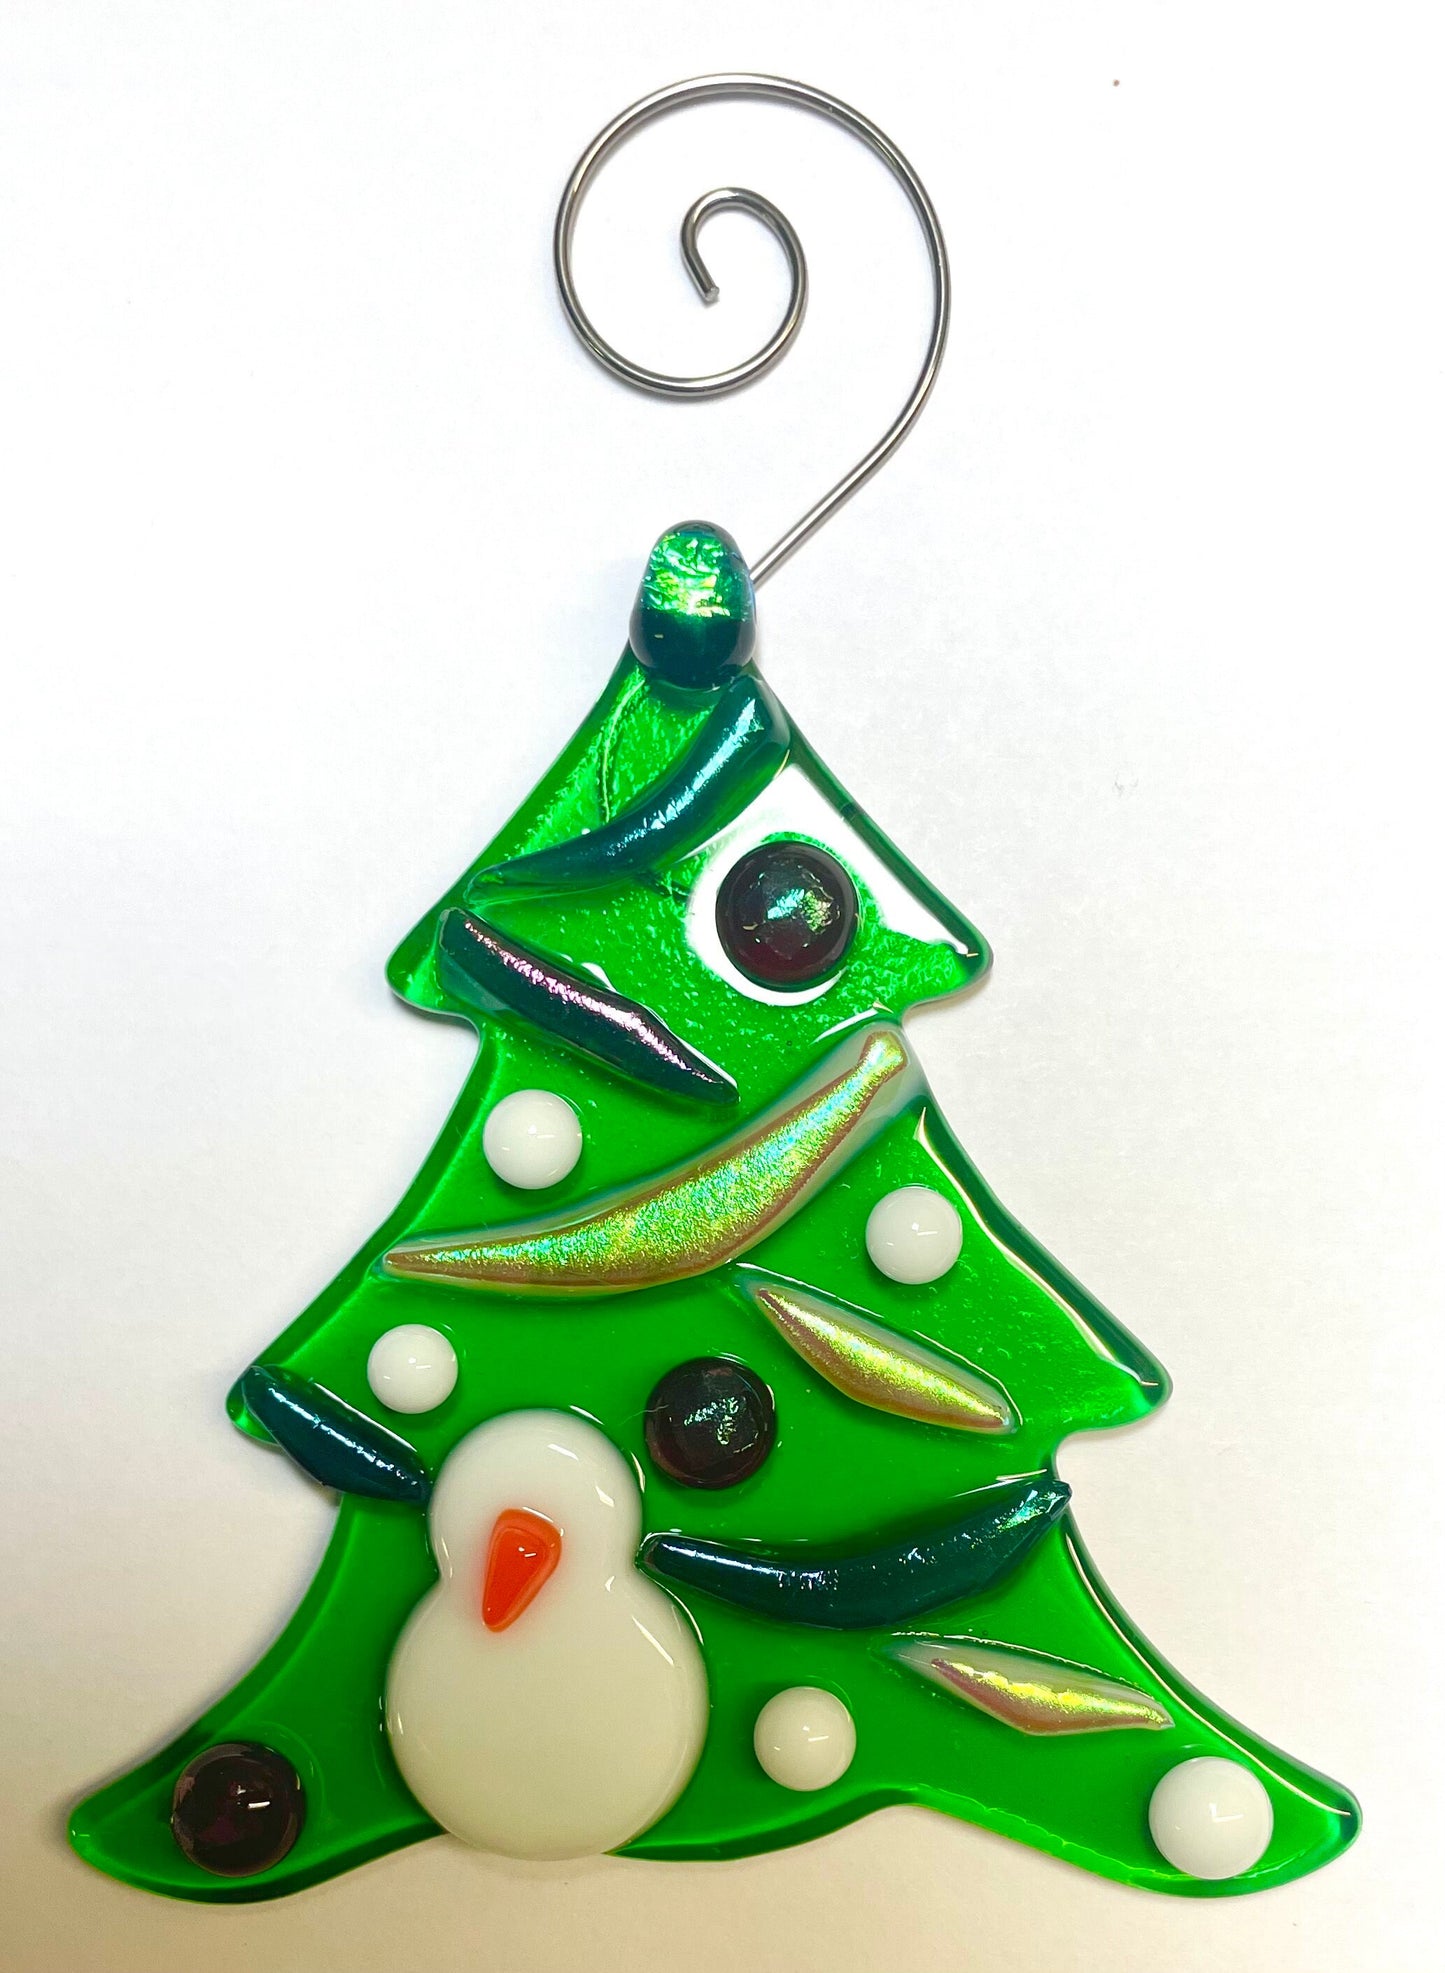 Christmas Tree & Snowman Fused Glass Ornament